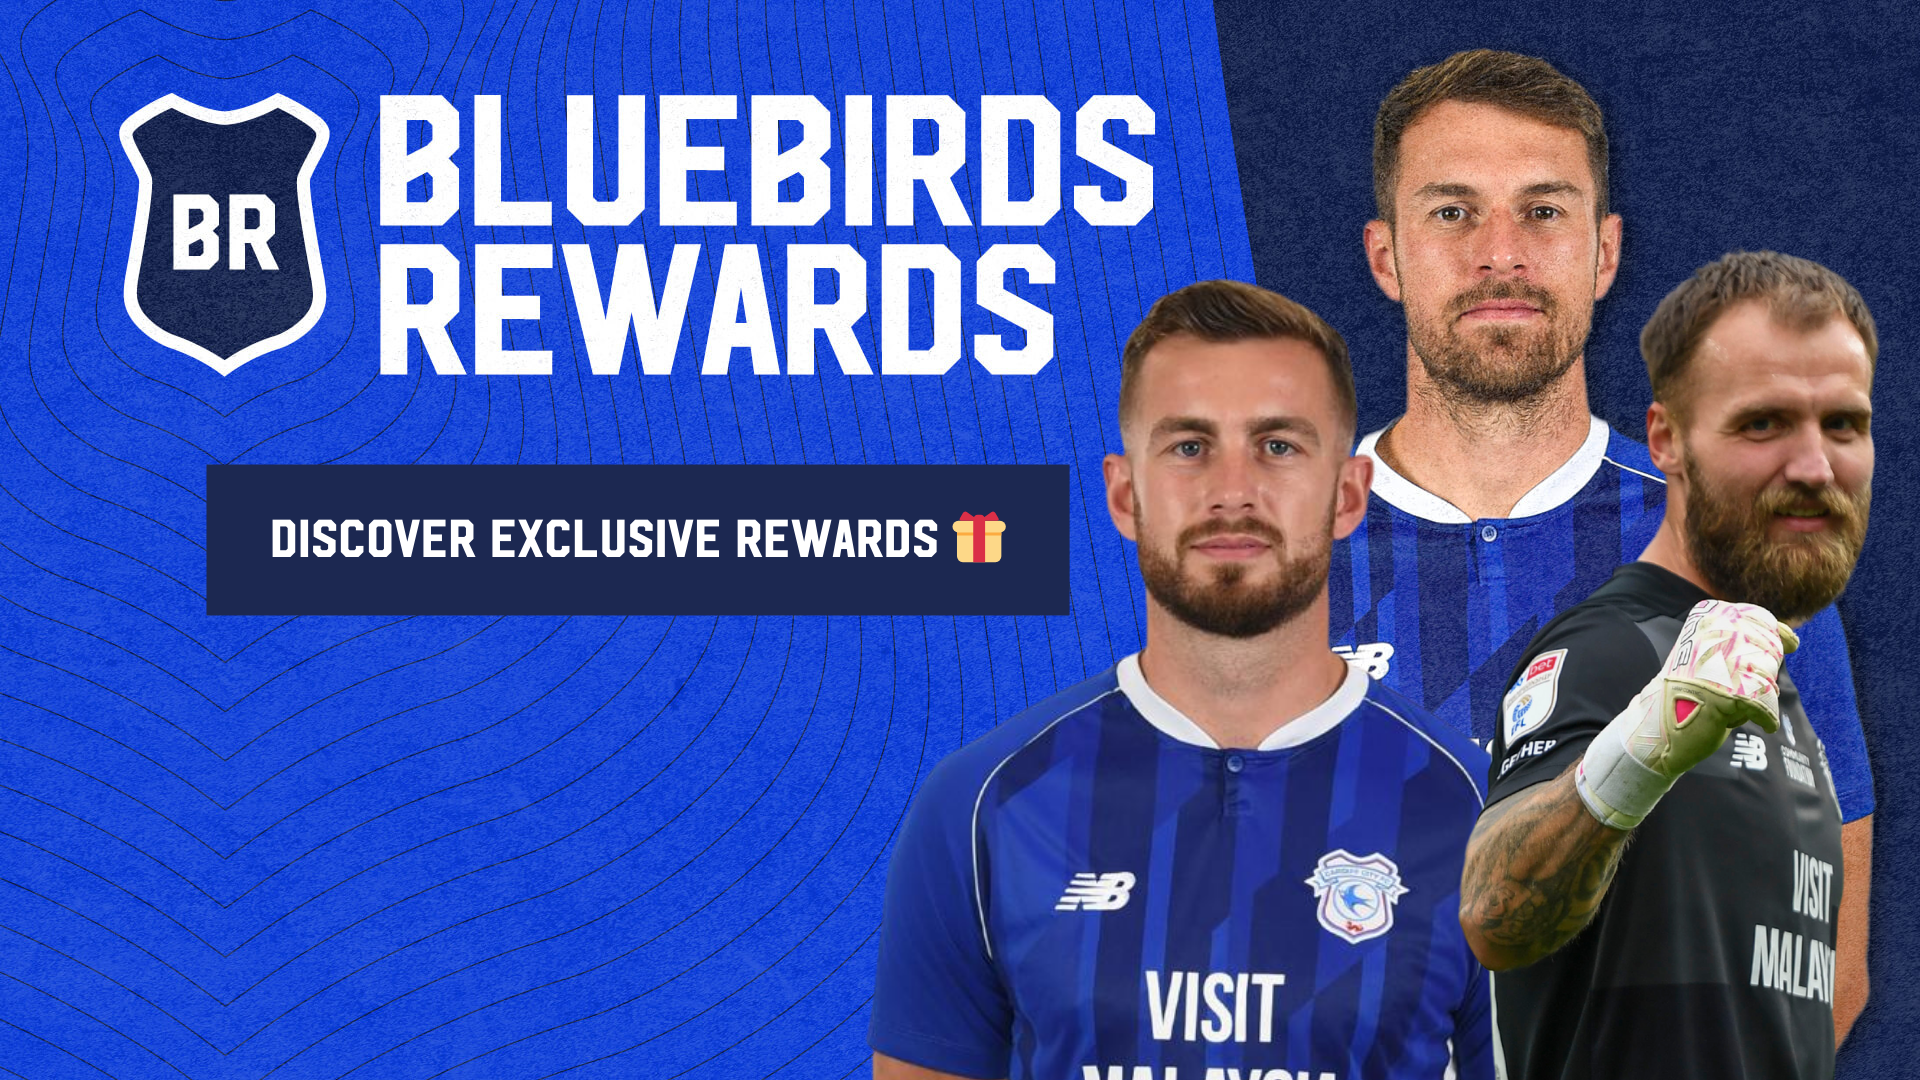 Bluebirds Rewards